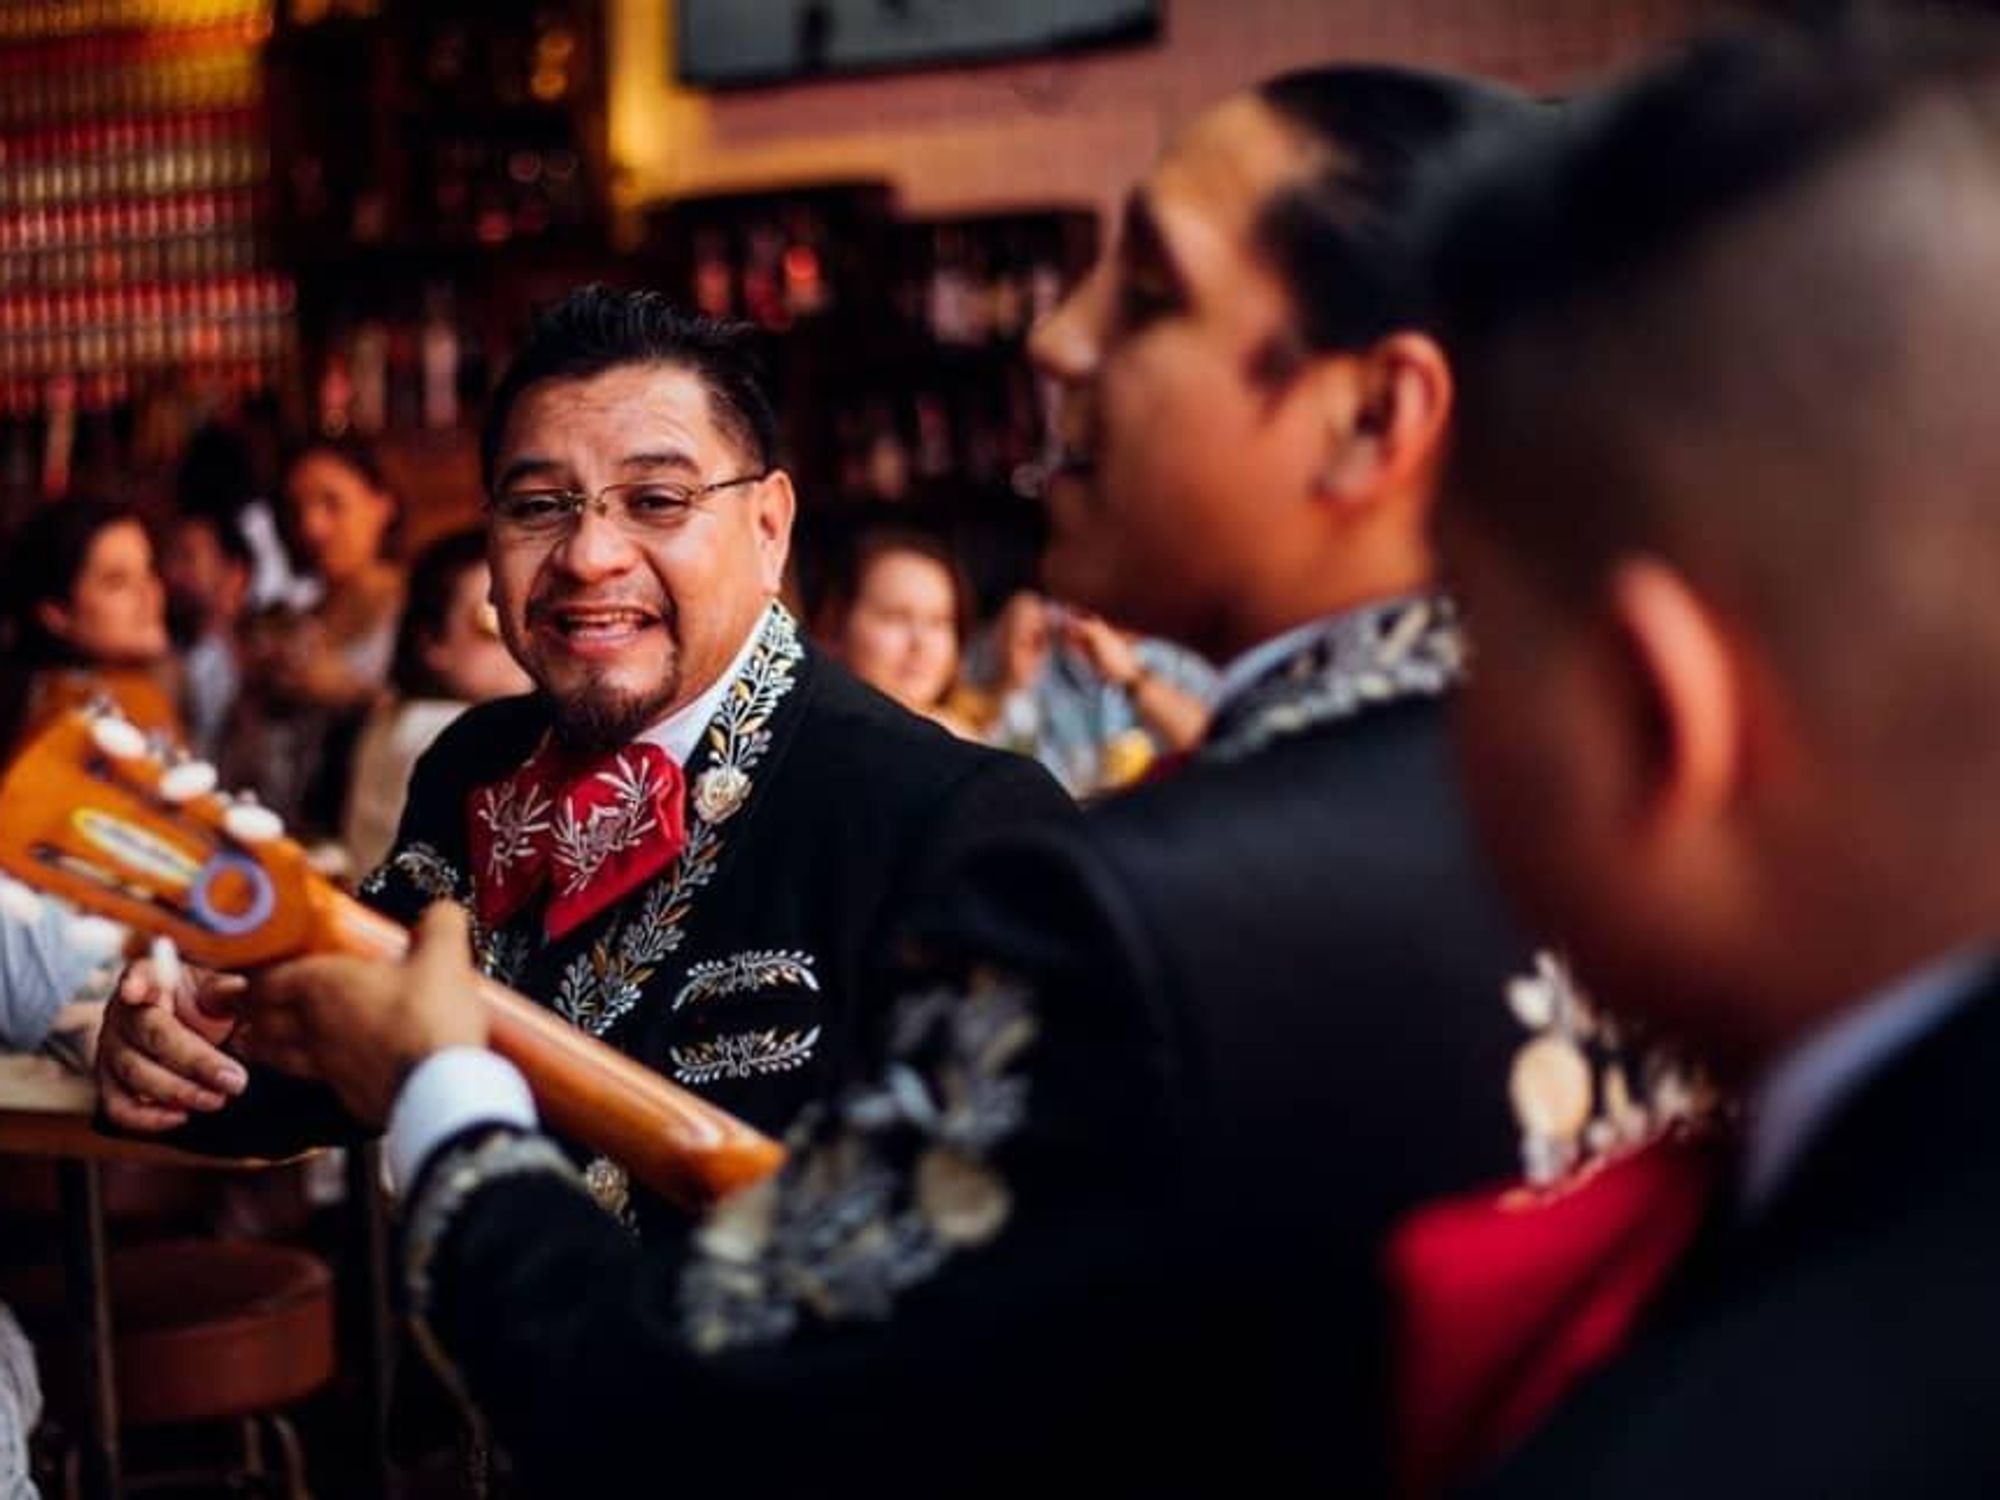 Mariachi musicians play inside a bar on Cinco de Mayo